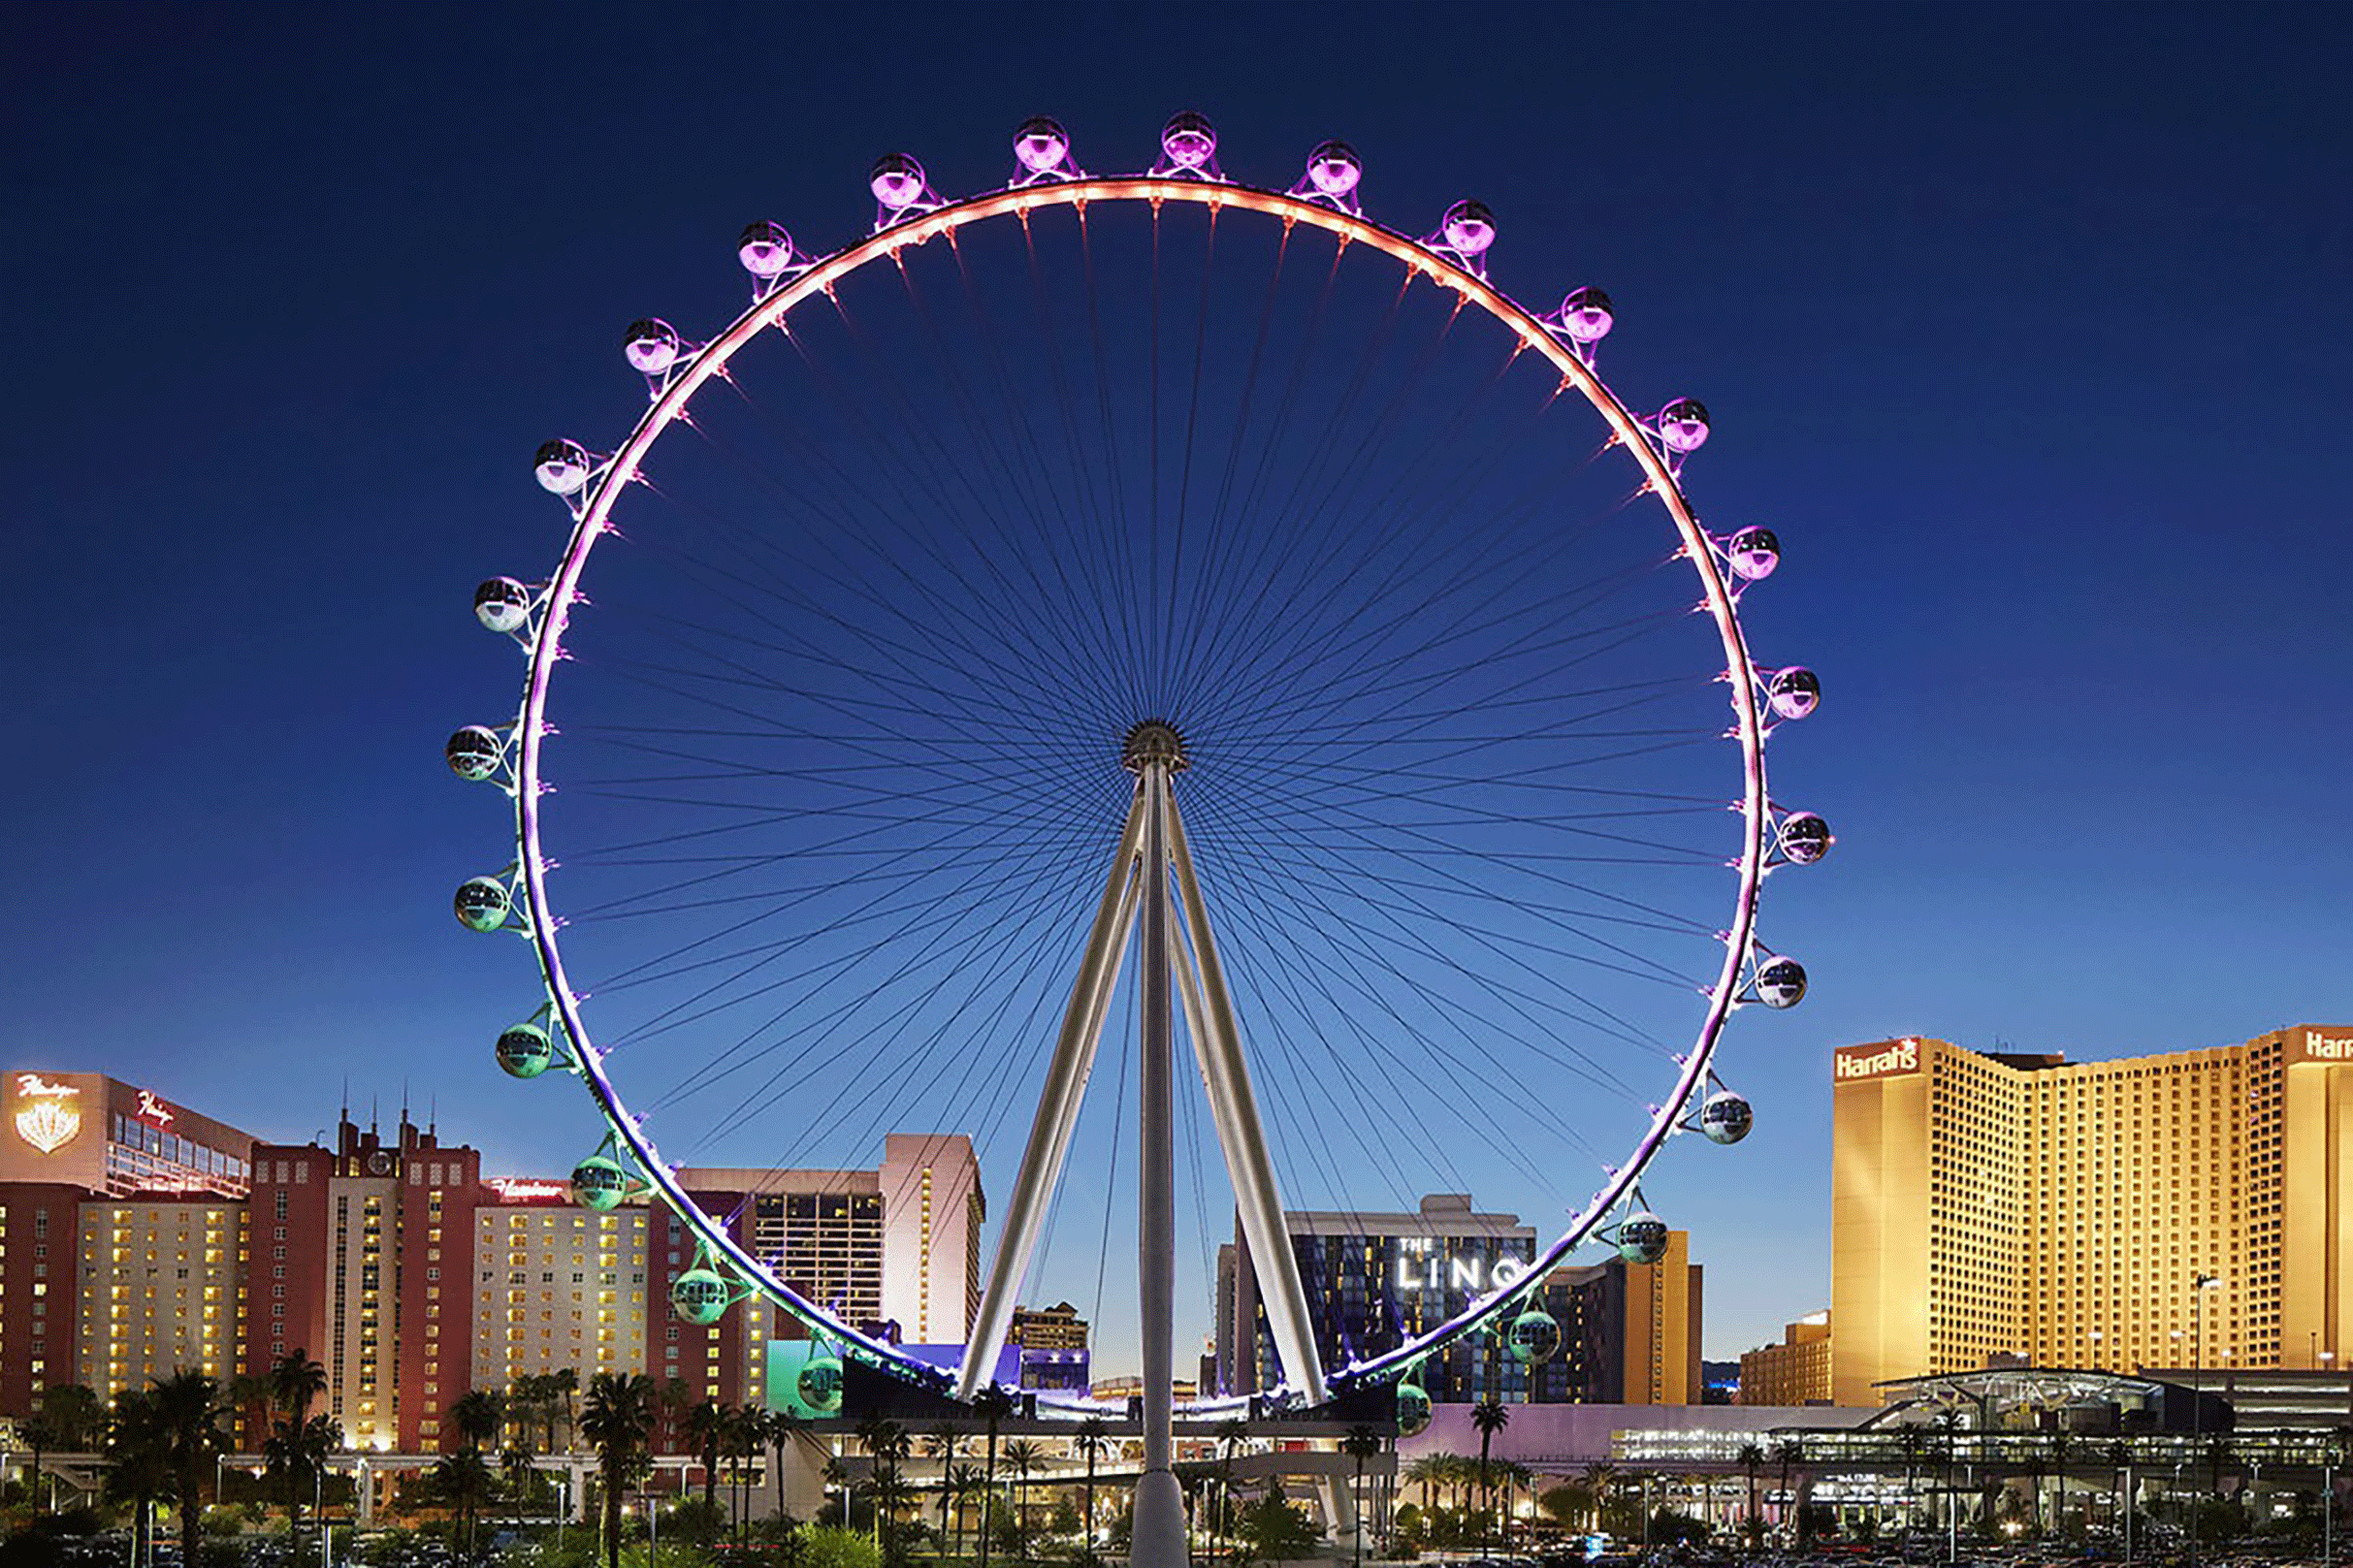 High Roller Wheel at The LINQ presales in Las Vegas